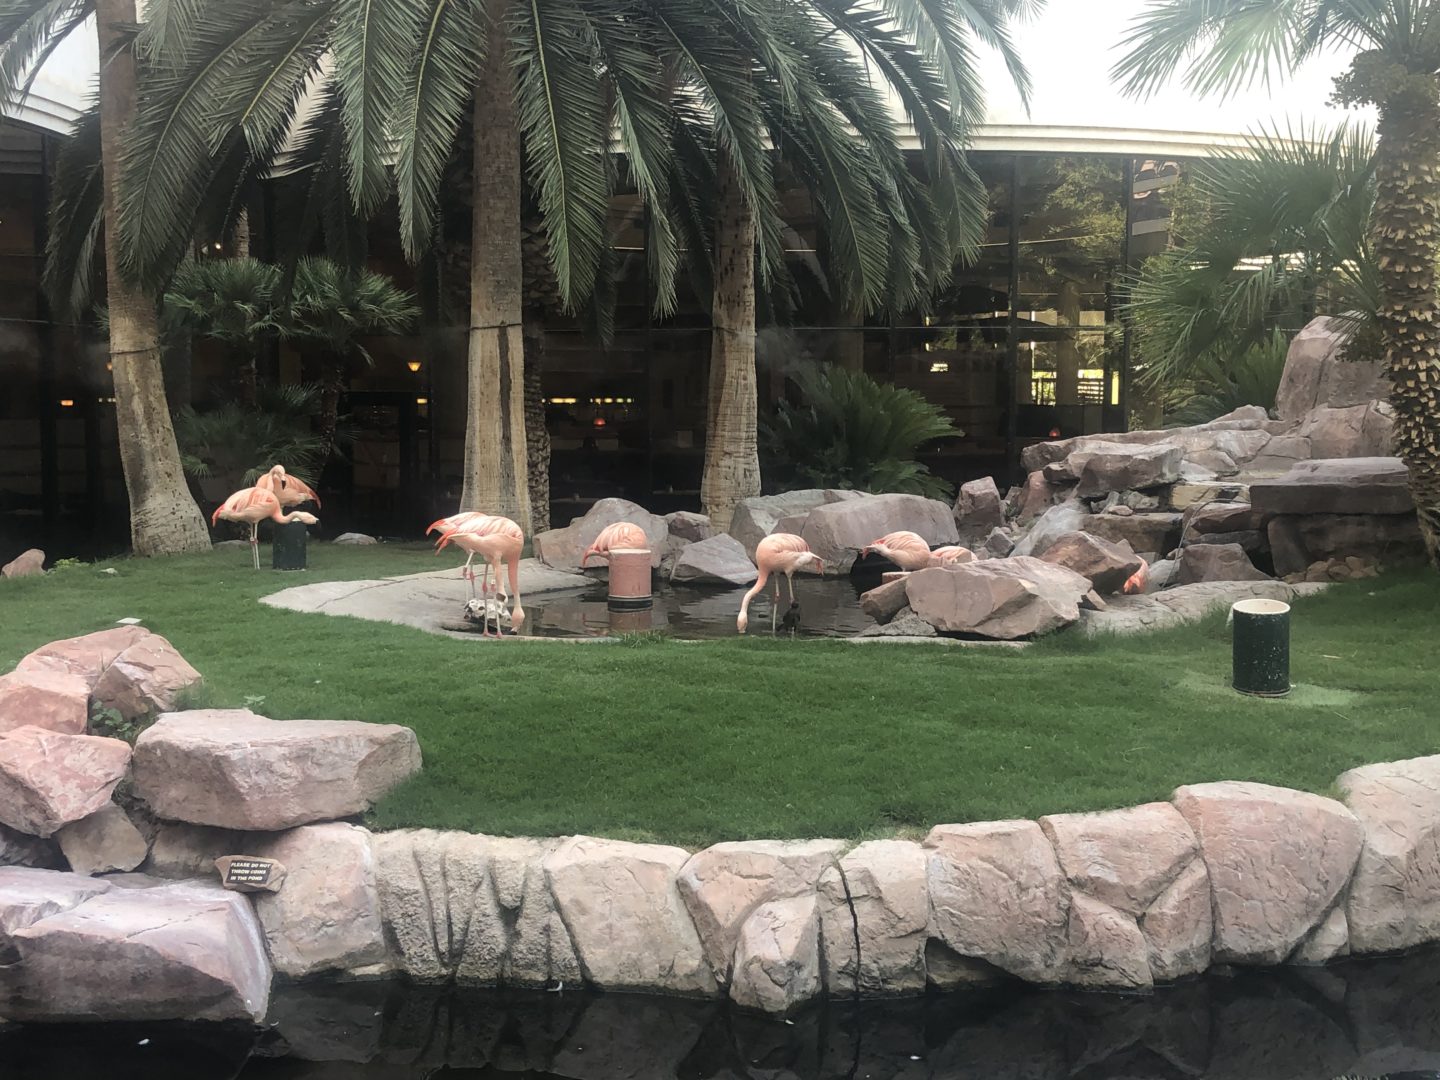 Flamingos at the Flamingo